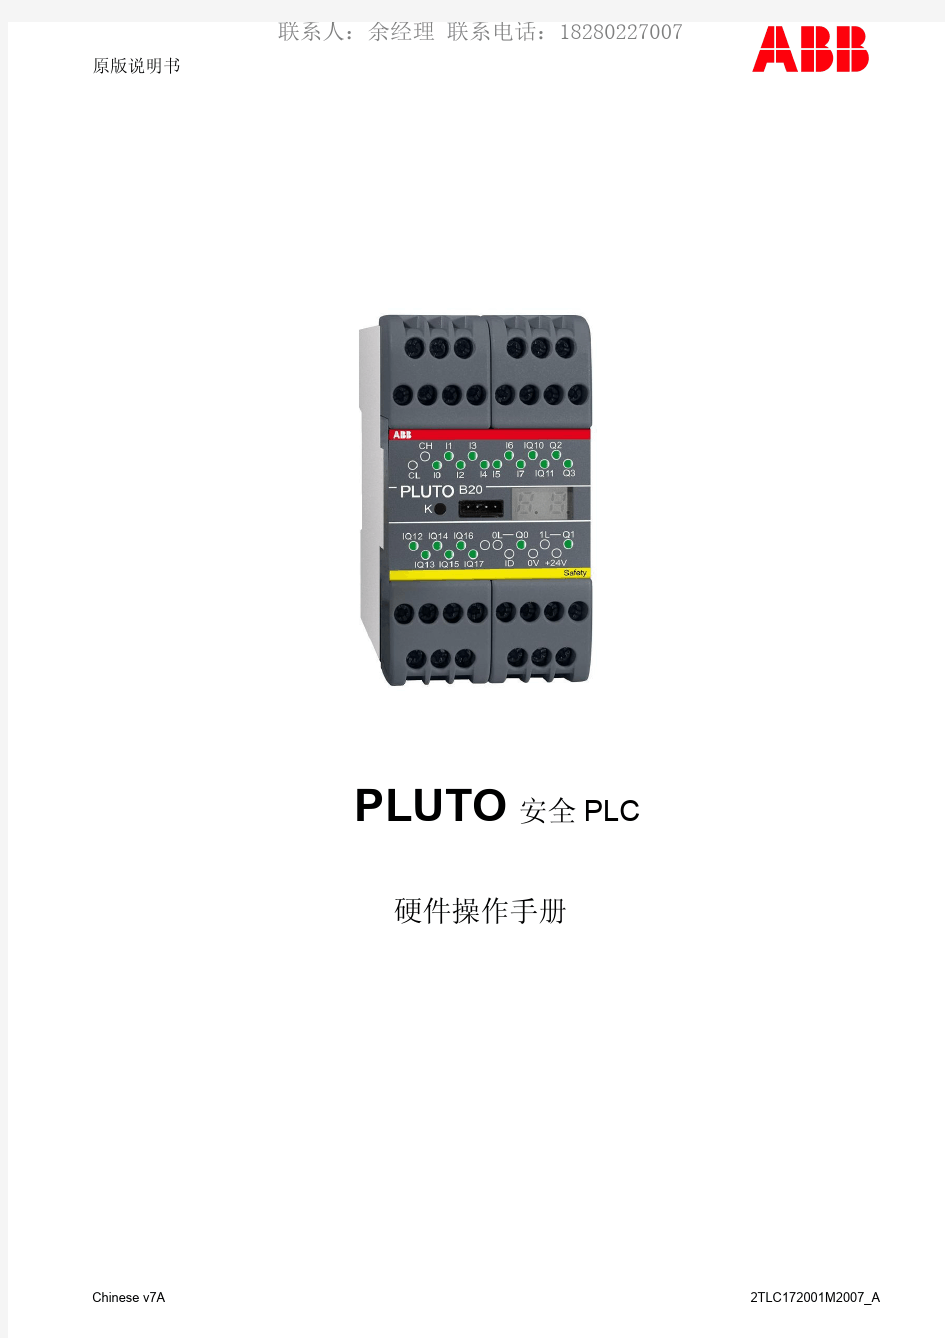 ABB Pluto PLC硬件操作手册